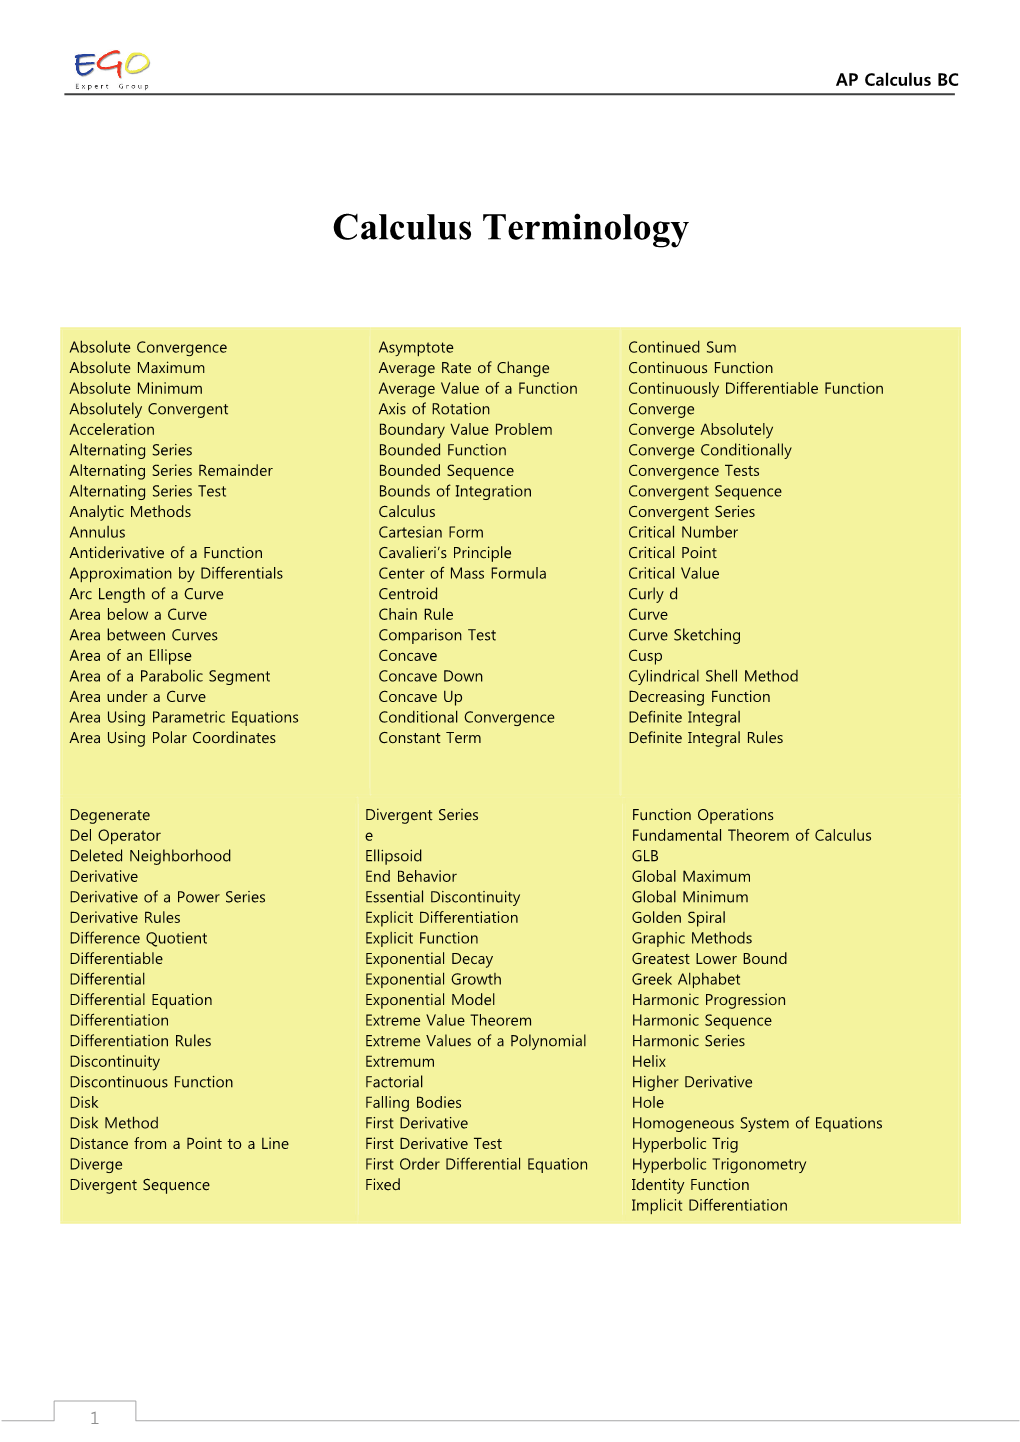 Calculus Terminology